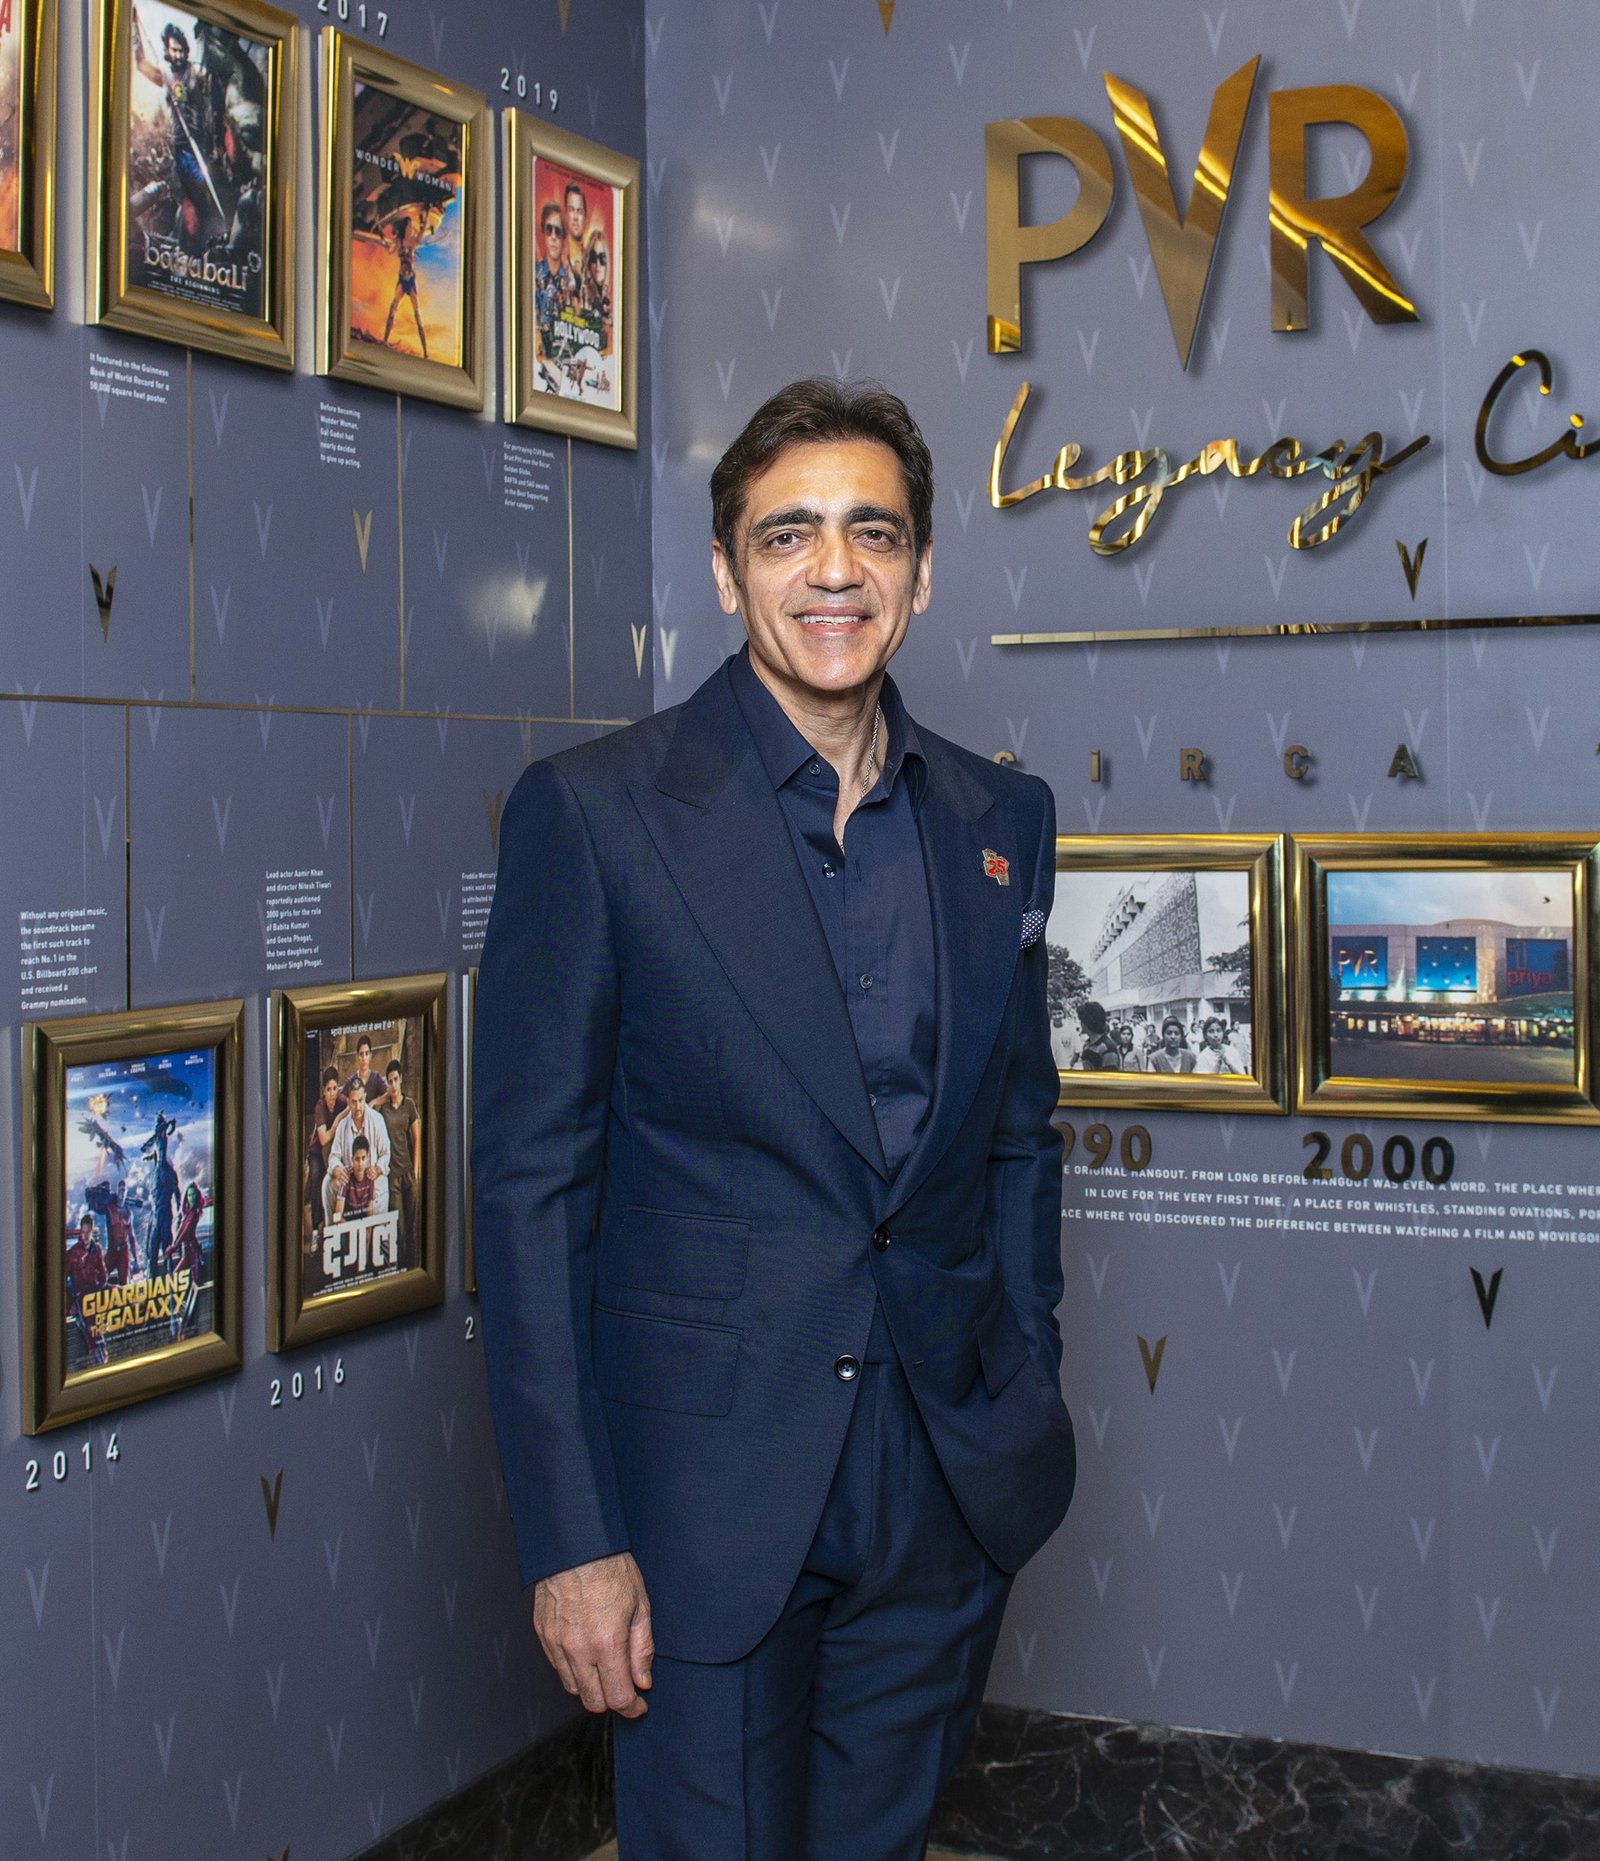 PVR Cinemas Mark Its Debut In Yamuna Nagar, The Industrial City Of Haryana